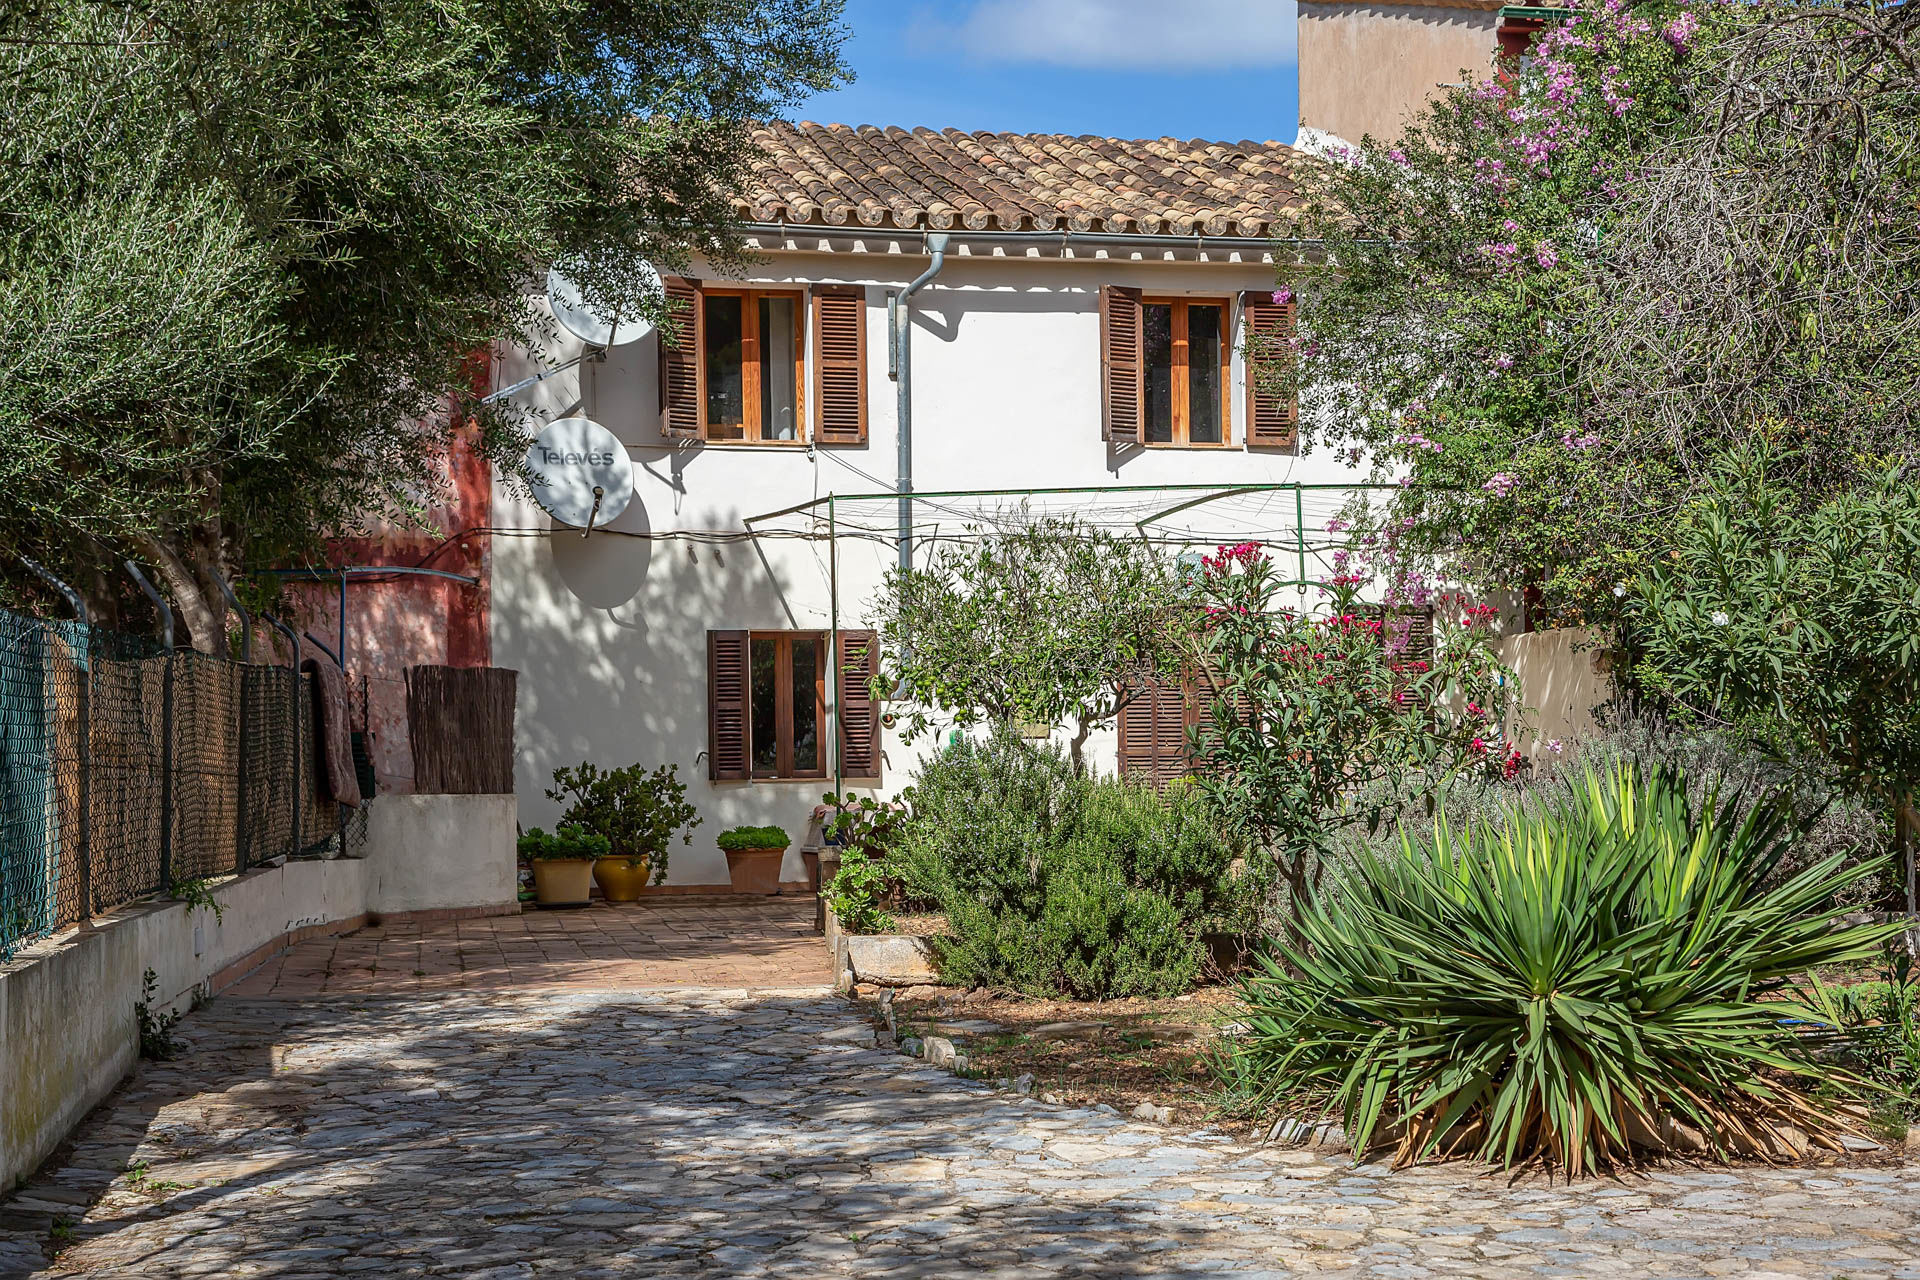 Mallorquinisches Dorfhaus in ruhiger Lage in S'Arraco - Frontansicht des Dorfhauses